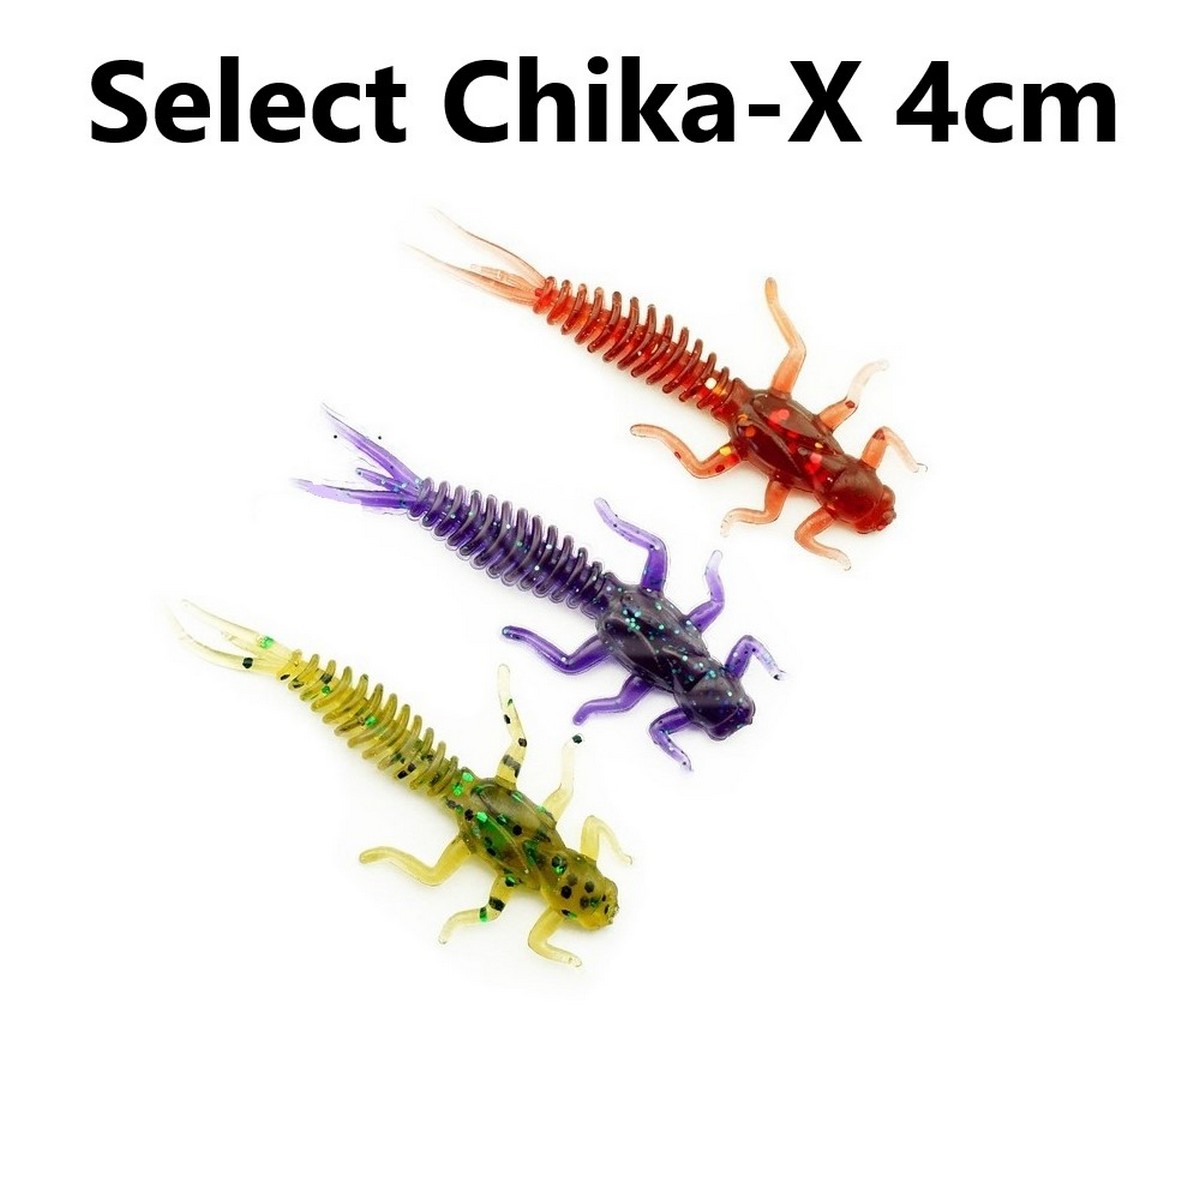 Select Chika-X